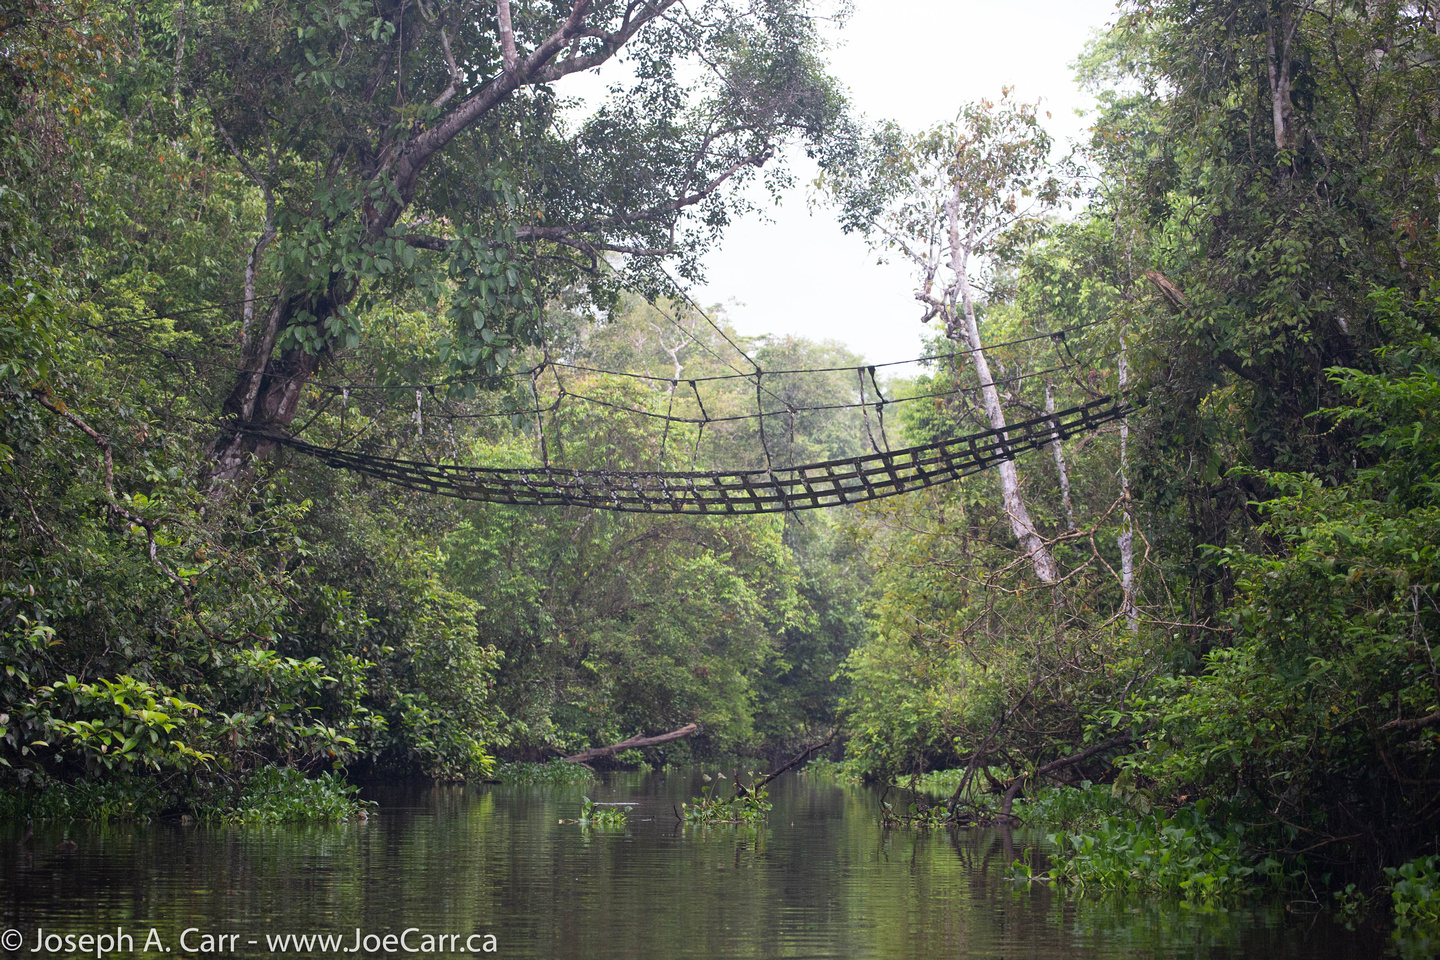 Orangutan bridge across the river